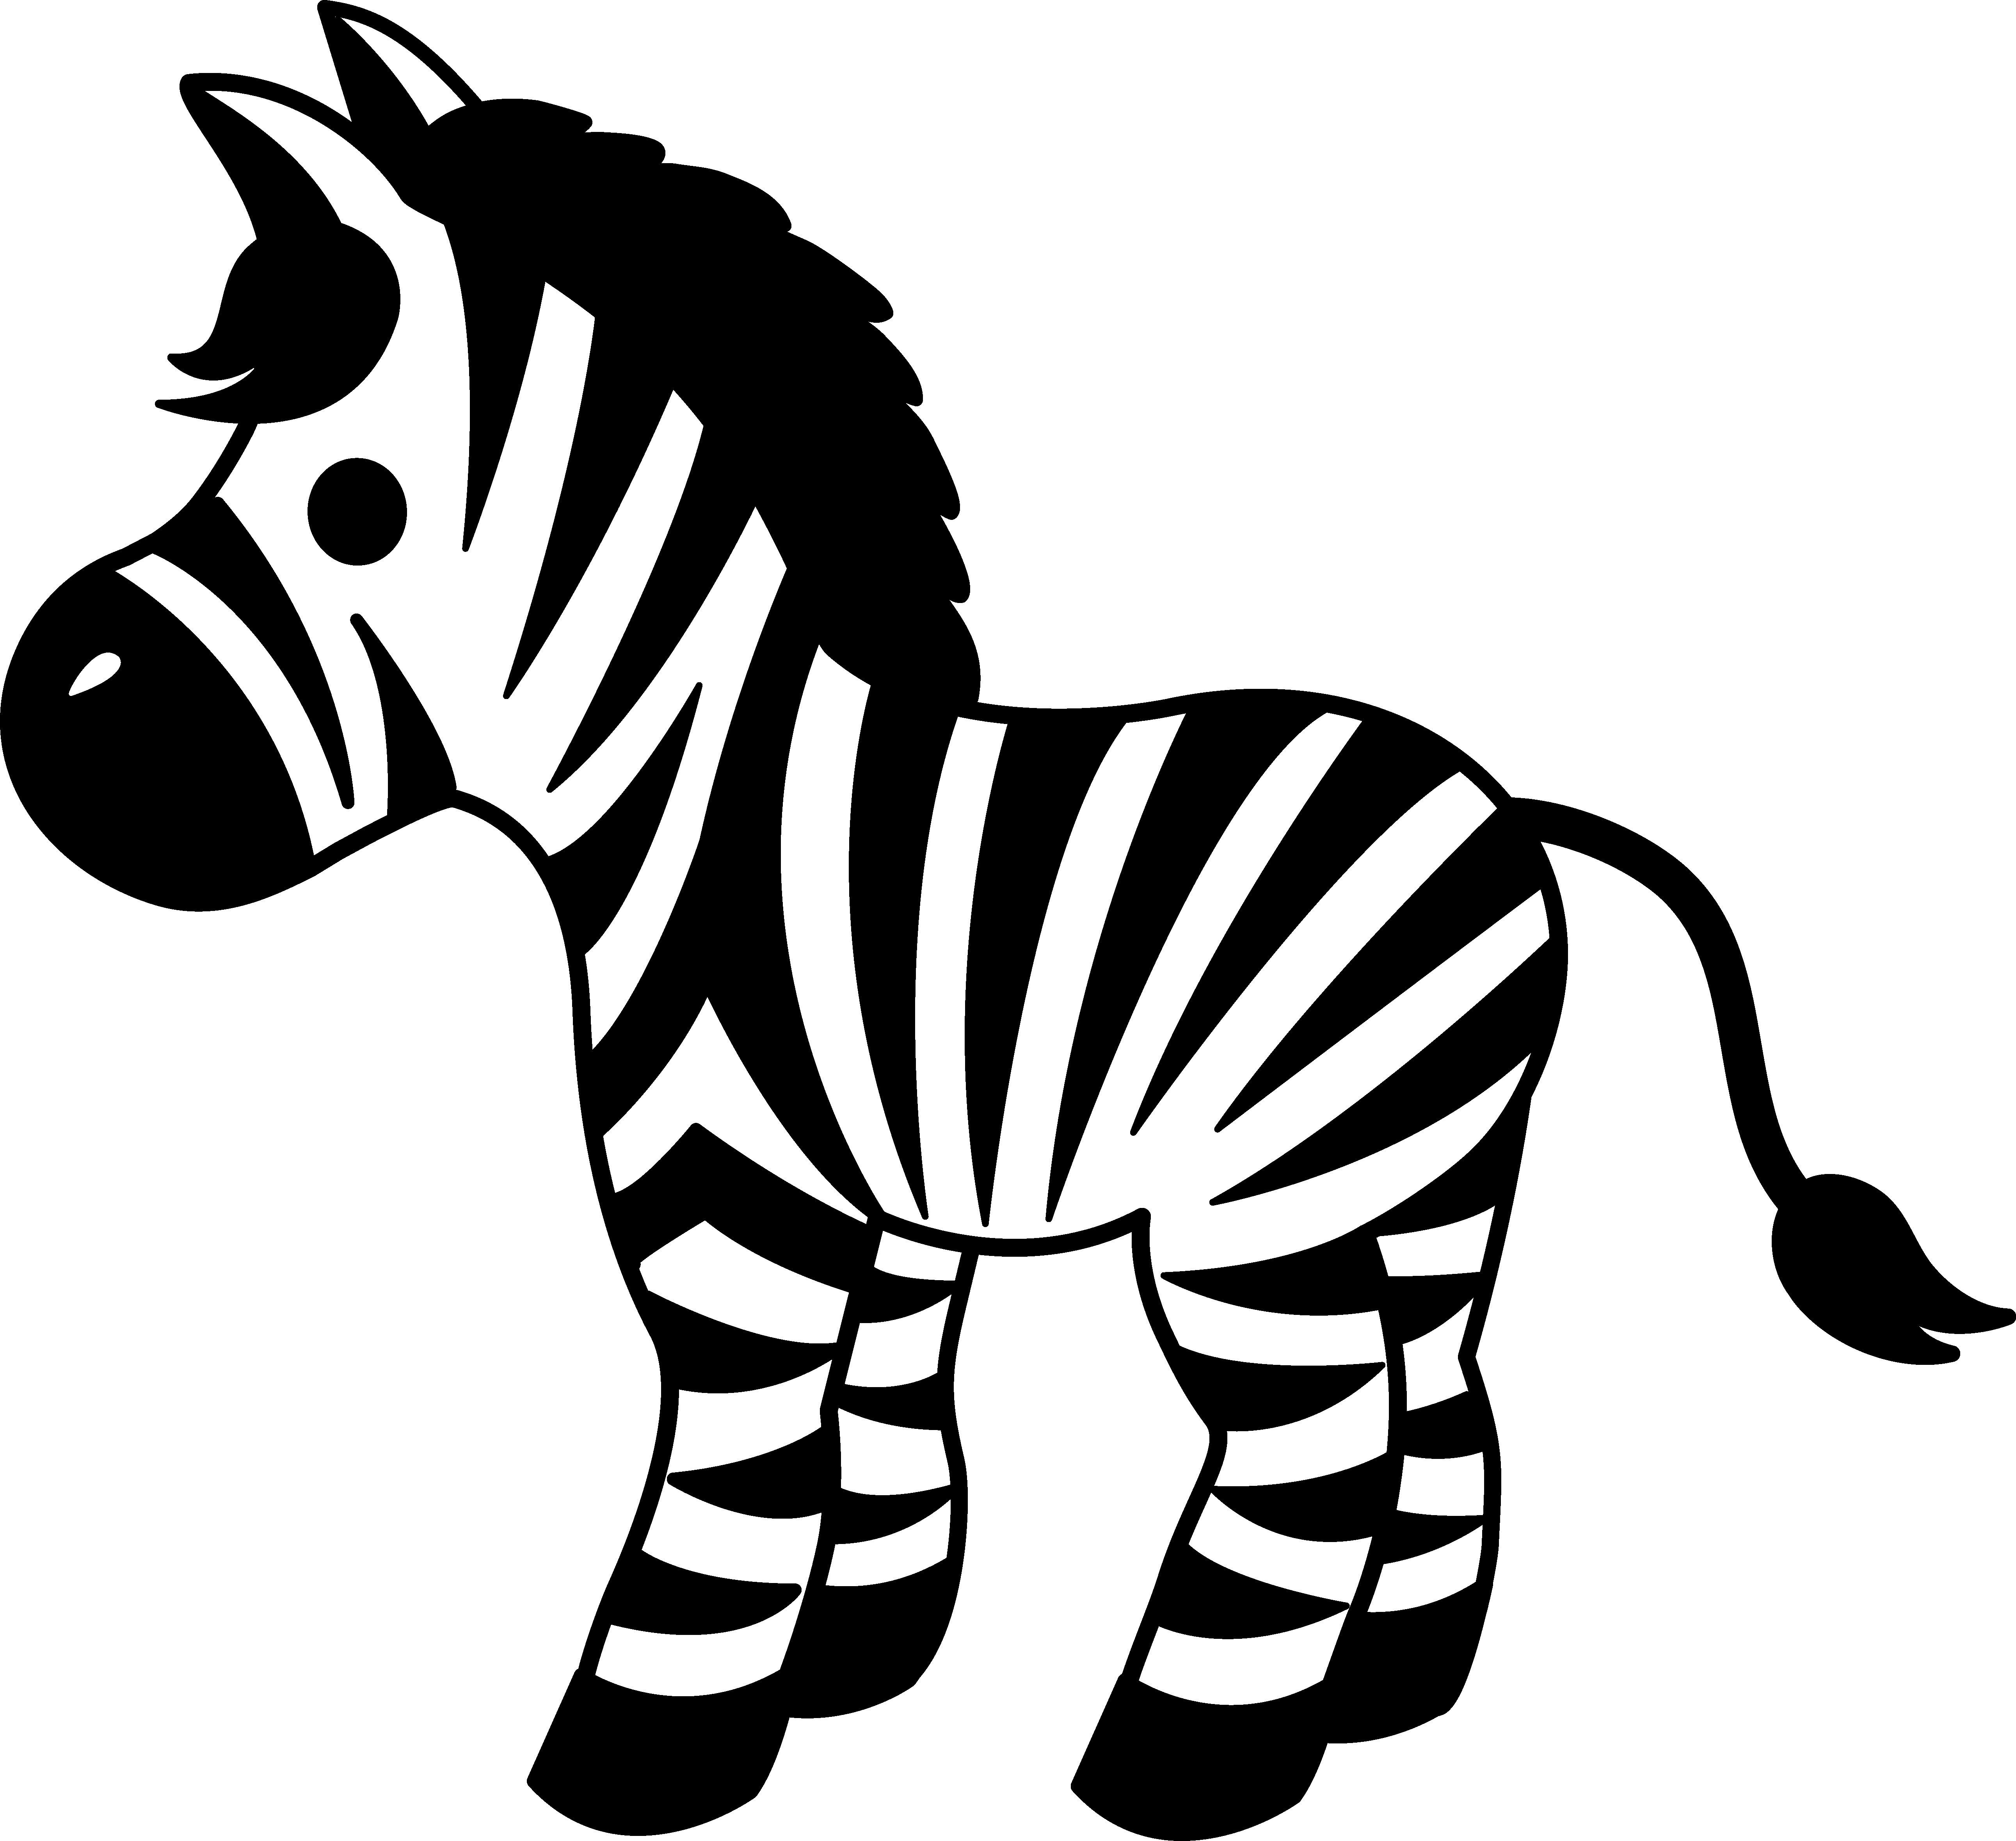 Zebra gallery by john. Cougar clipart cartoon